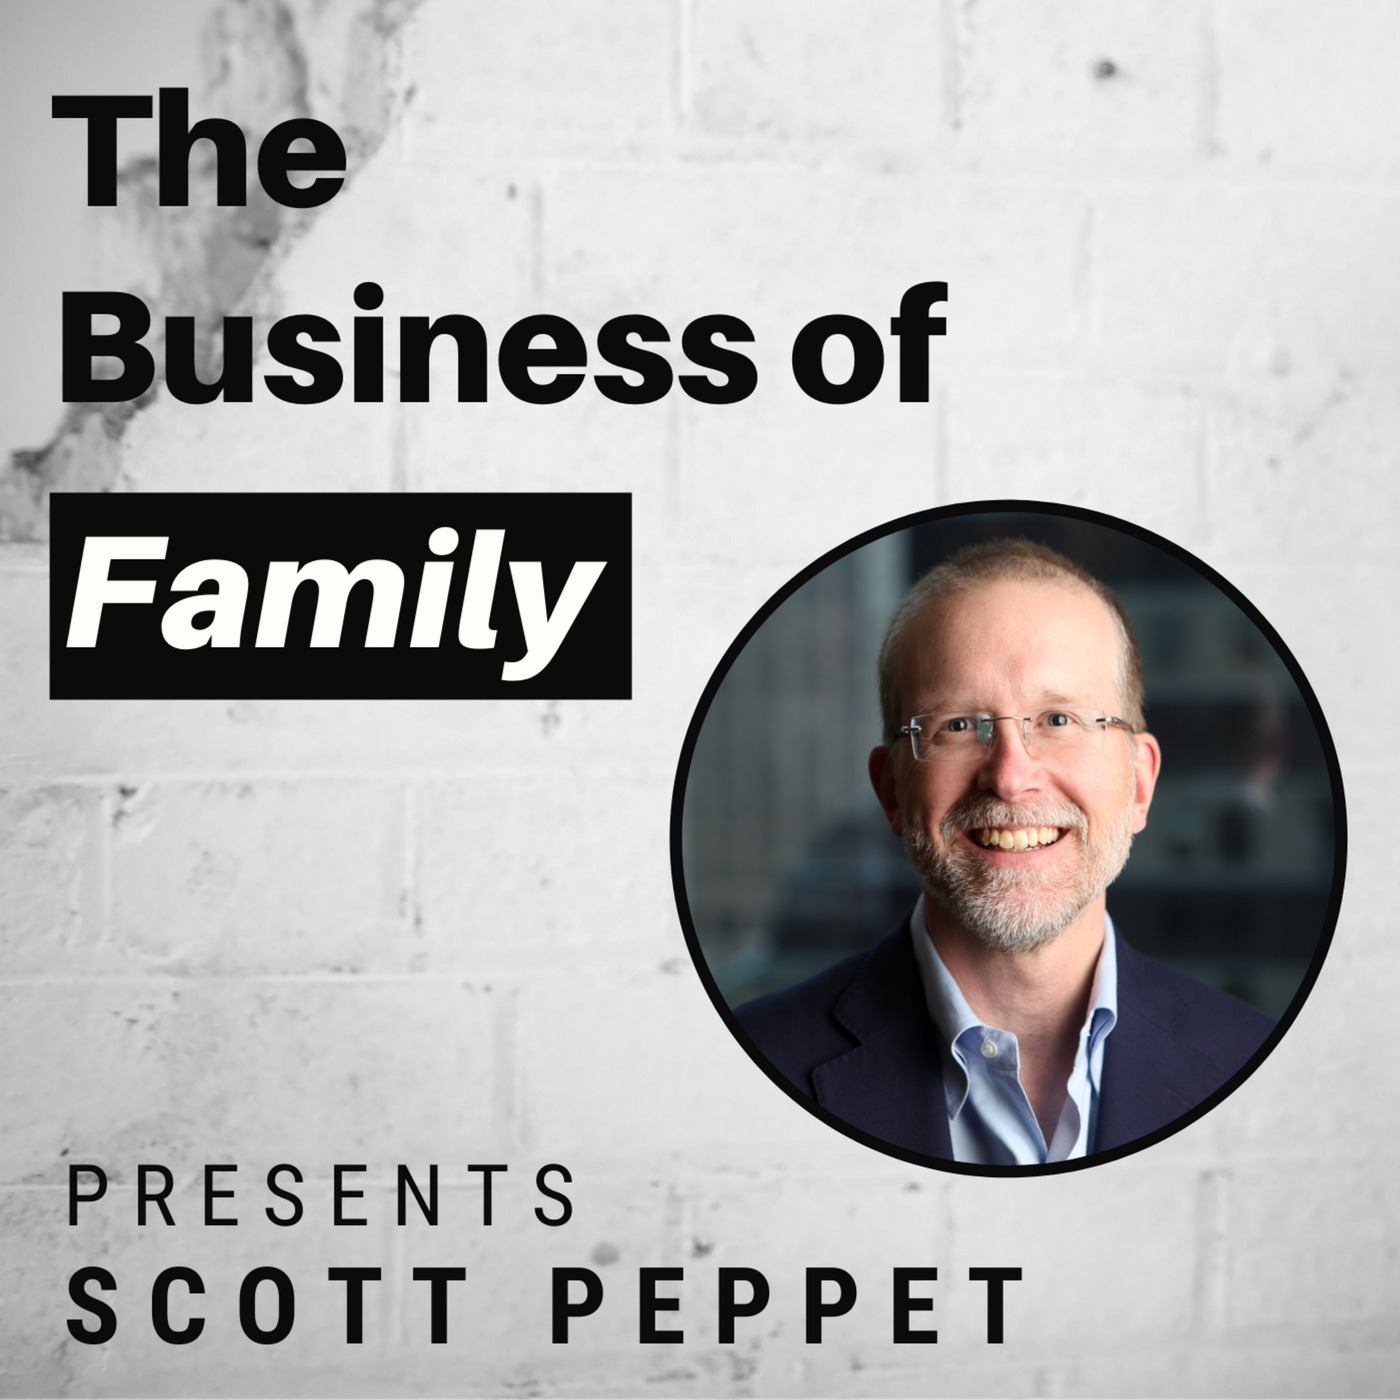 The Business of Family: Scott Peppet - Building a Family-Focused Office for Sam Zell